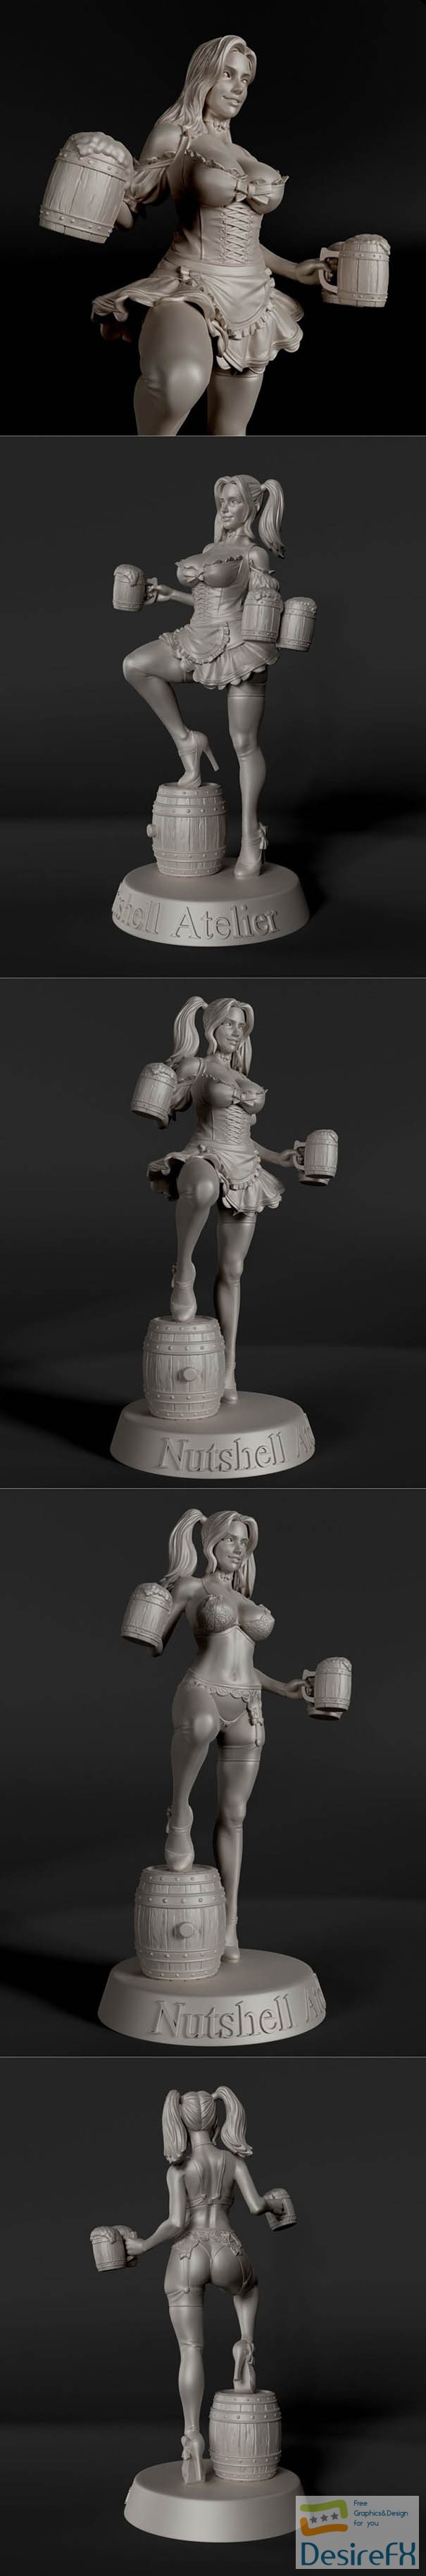 Nutshell atelier – Barmaid Girl – 3D Print